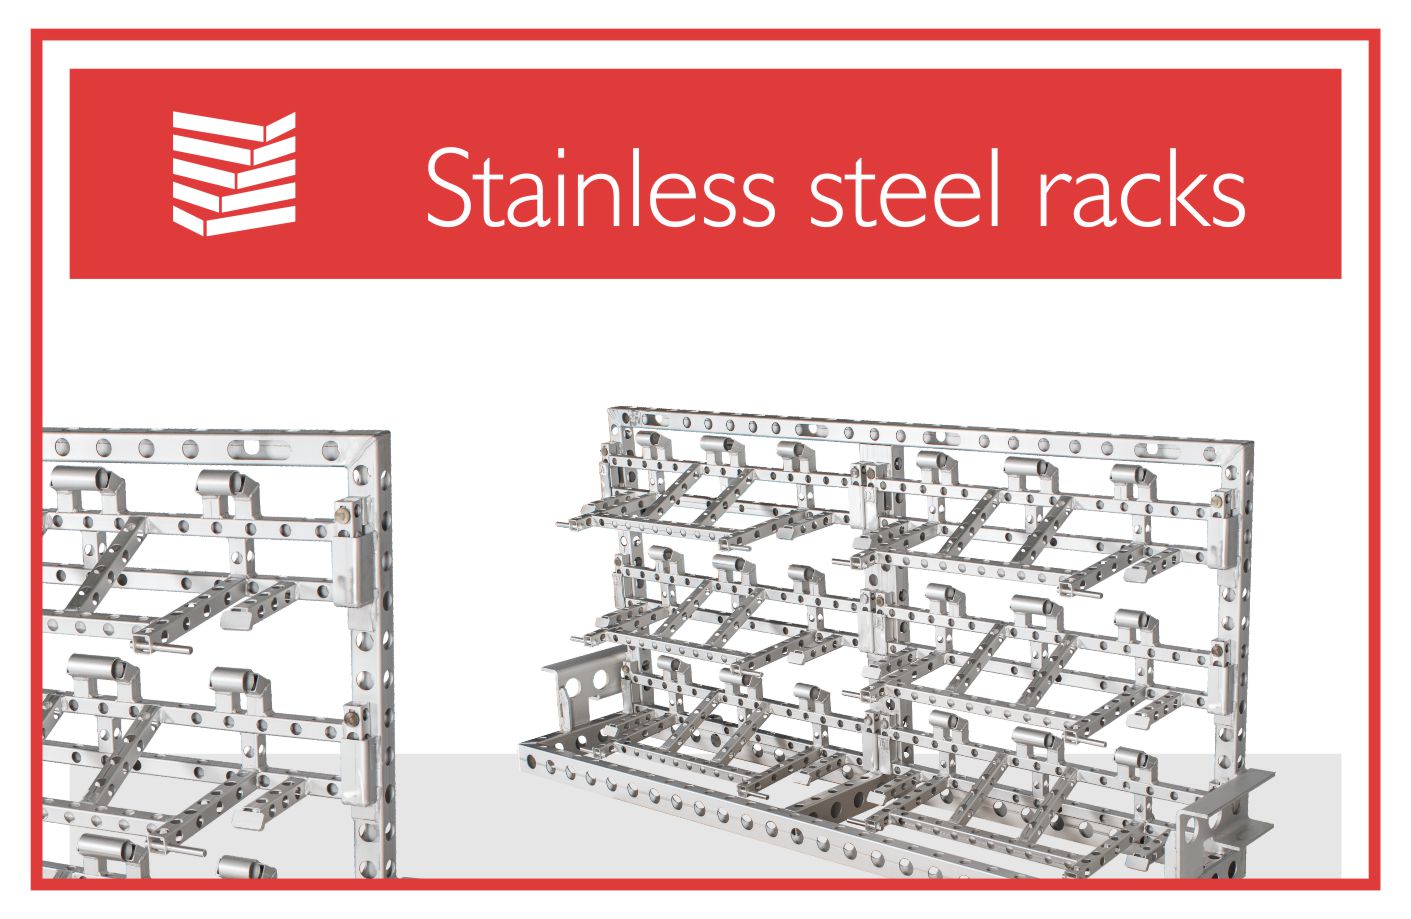 Stainless steel racks